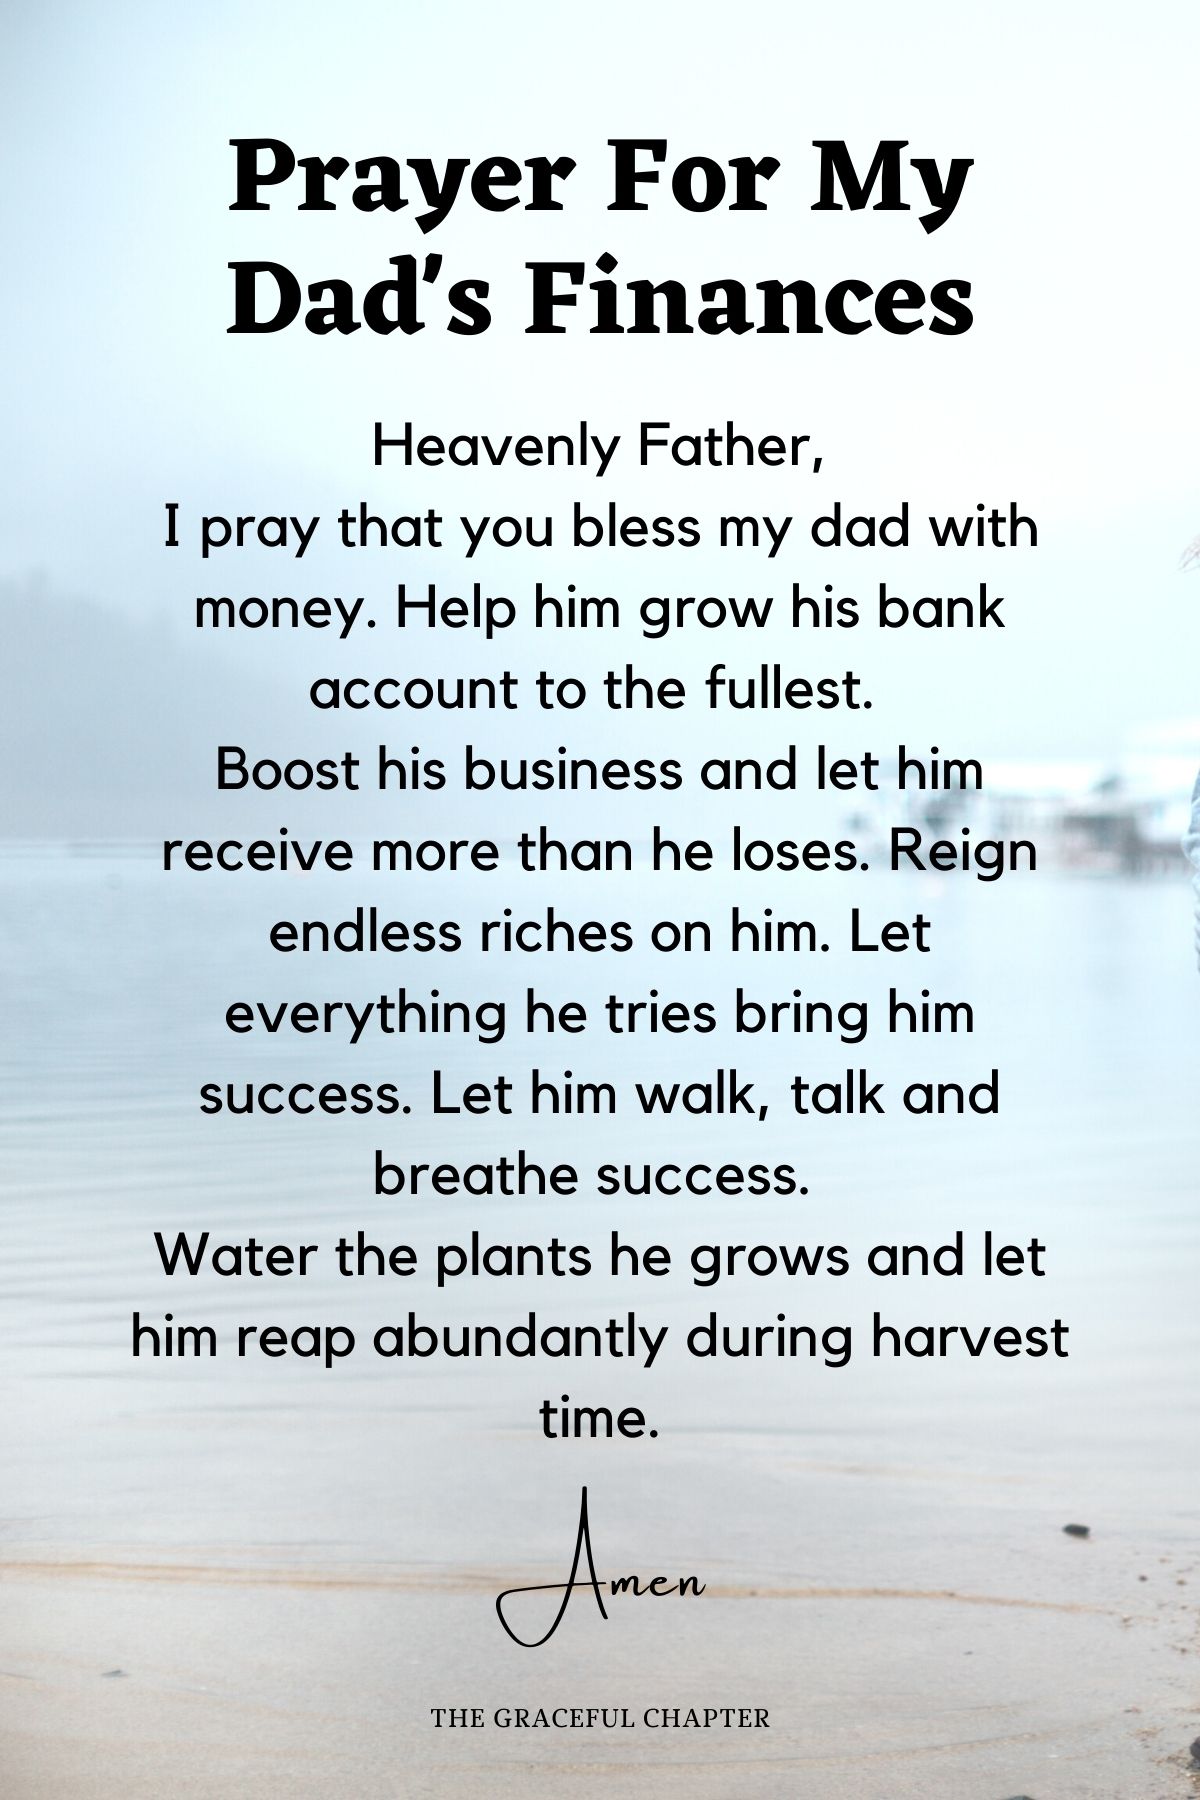 Prayer for my dad's finances